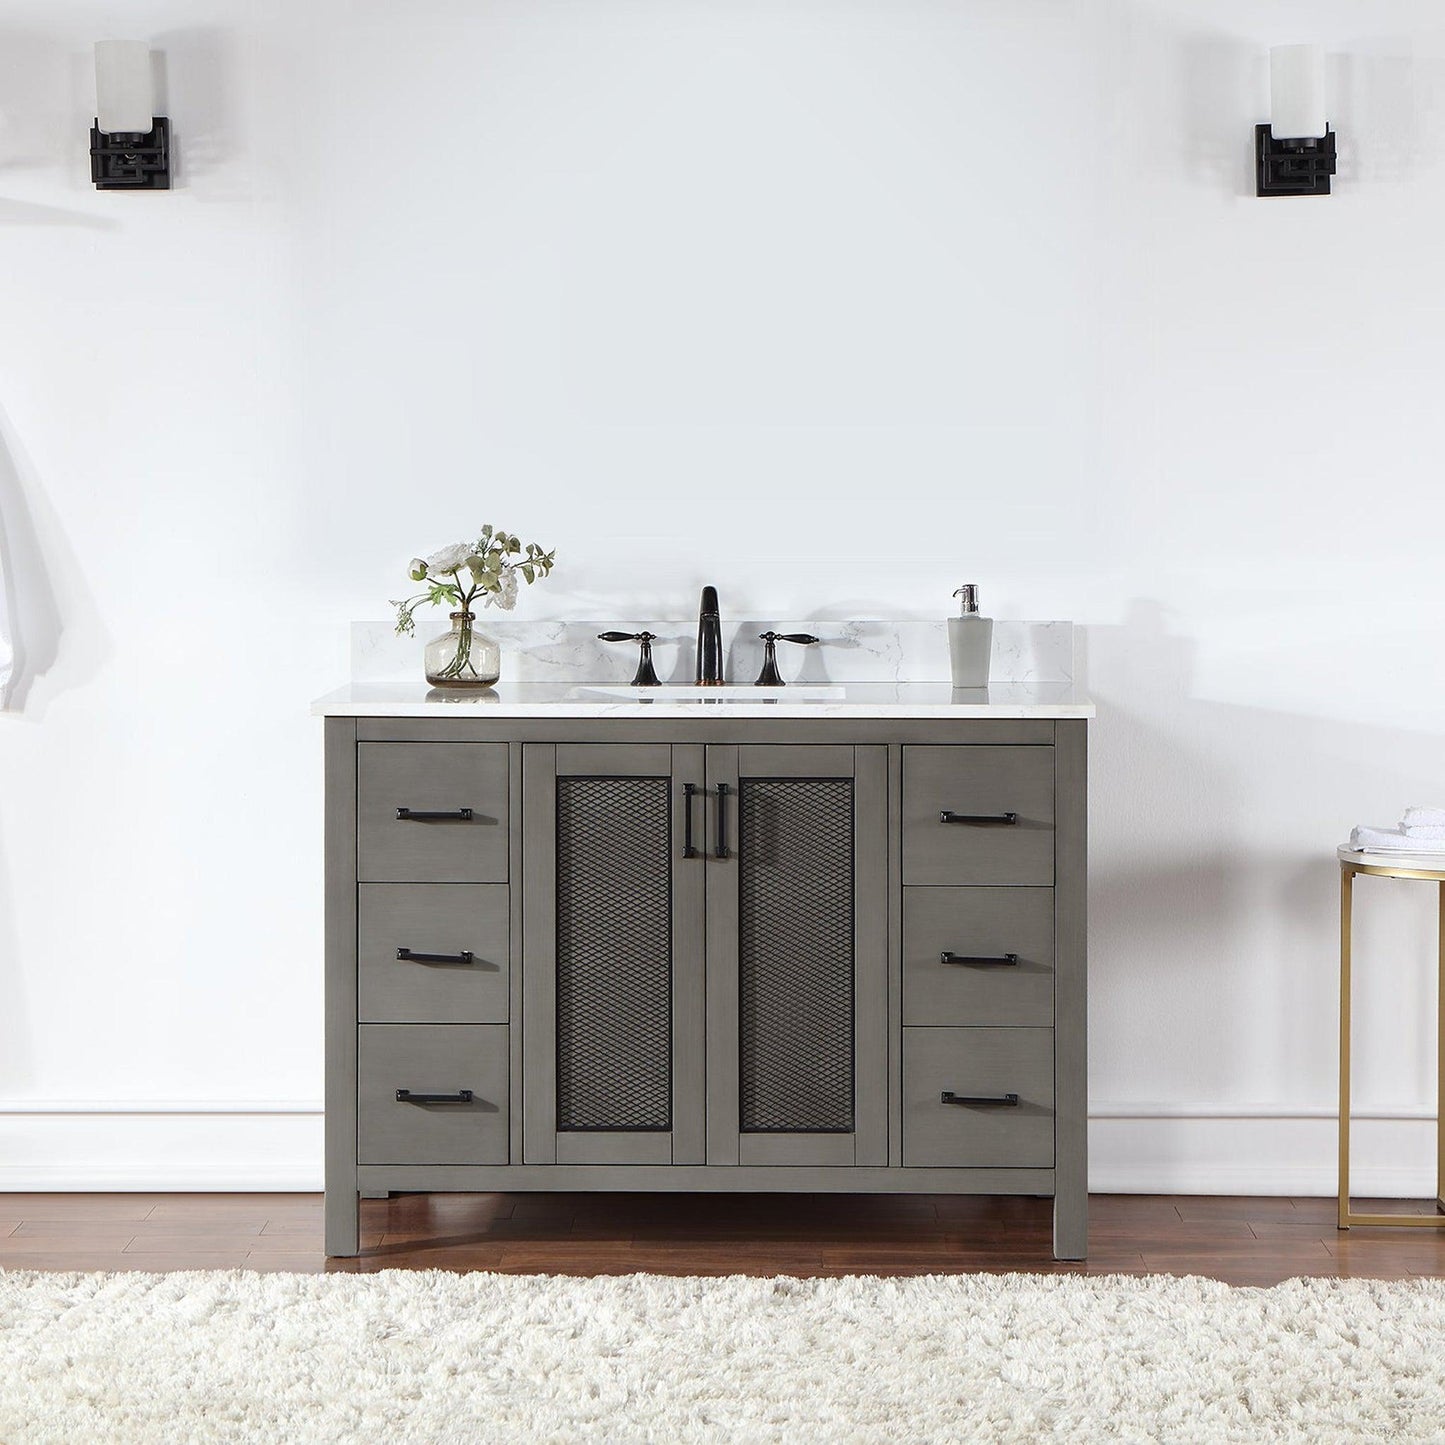 Altair Hadiya 48" Single Gray Pine Freestanding Bathroom Vanity Set With Elegant Aosta White Composite Stone Top, Rectangular Undermount Ceramic Sink, Overflow, and Backsplash